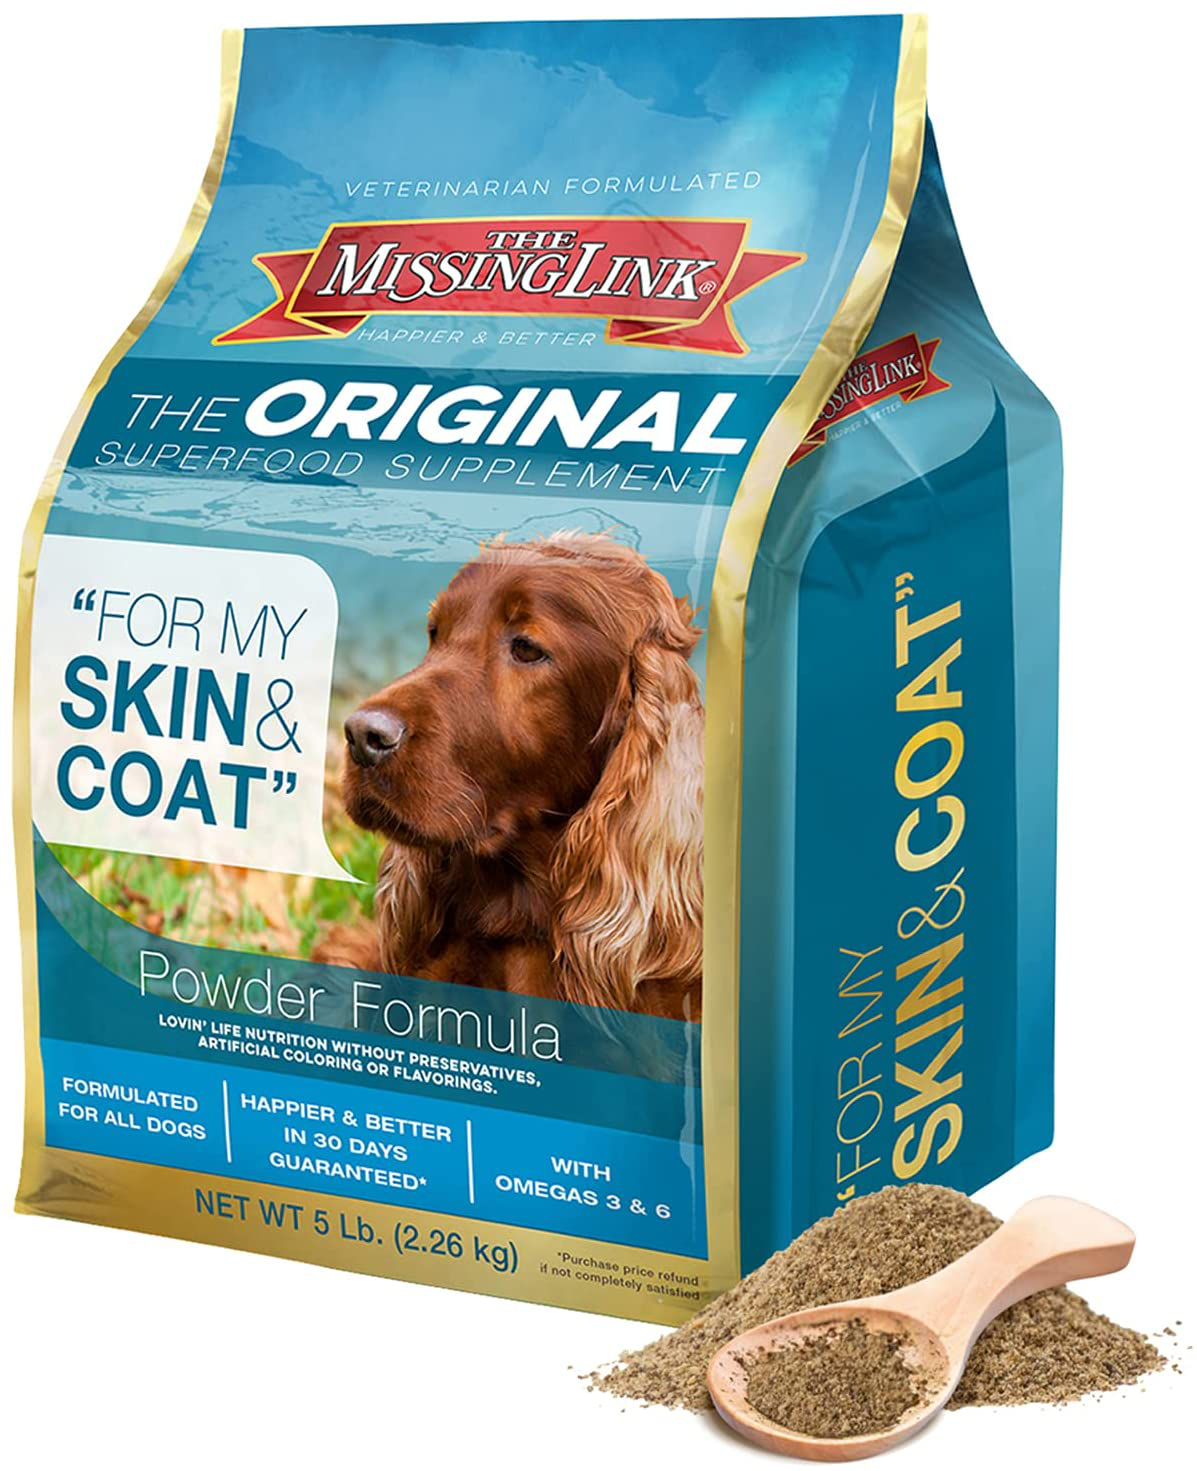 The Missing Link Original Skin & Coat Powder, All-Natural Veterinarian Formulated Superfood Dog Supplement, Balanced Omegas 3 & 6 for Healthy Skin & Coat